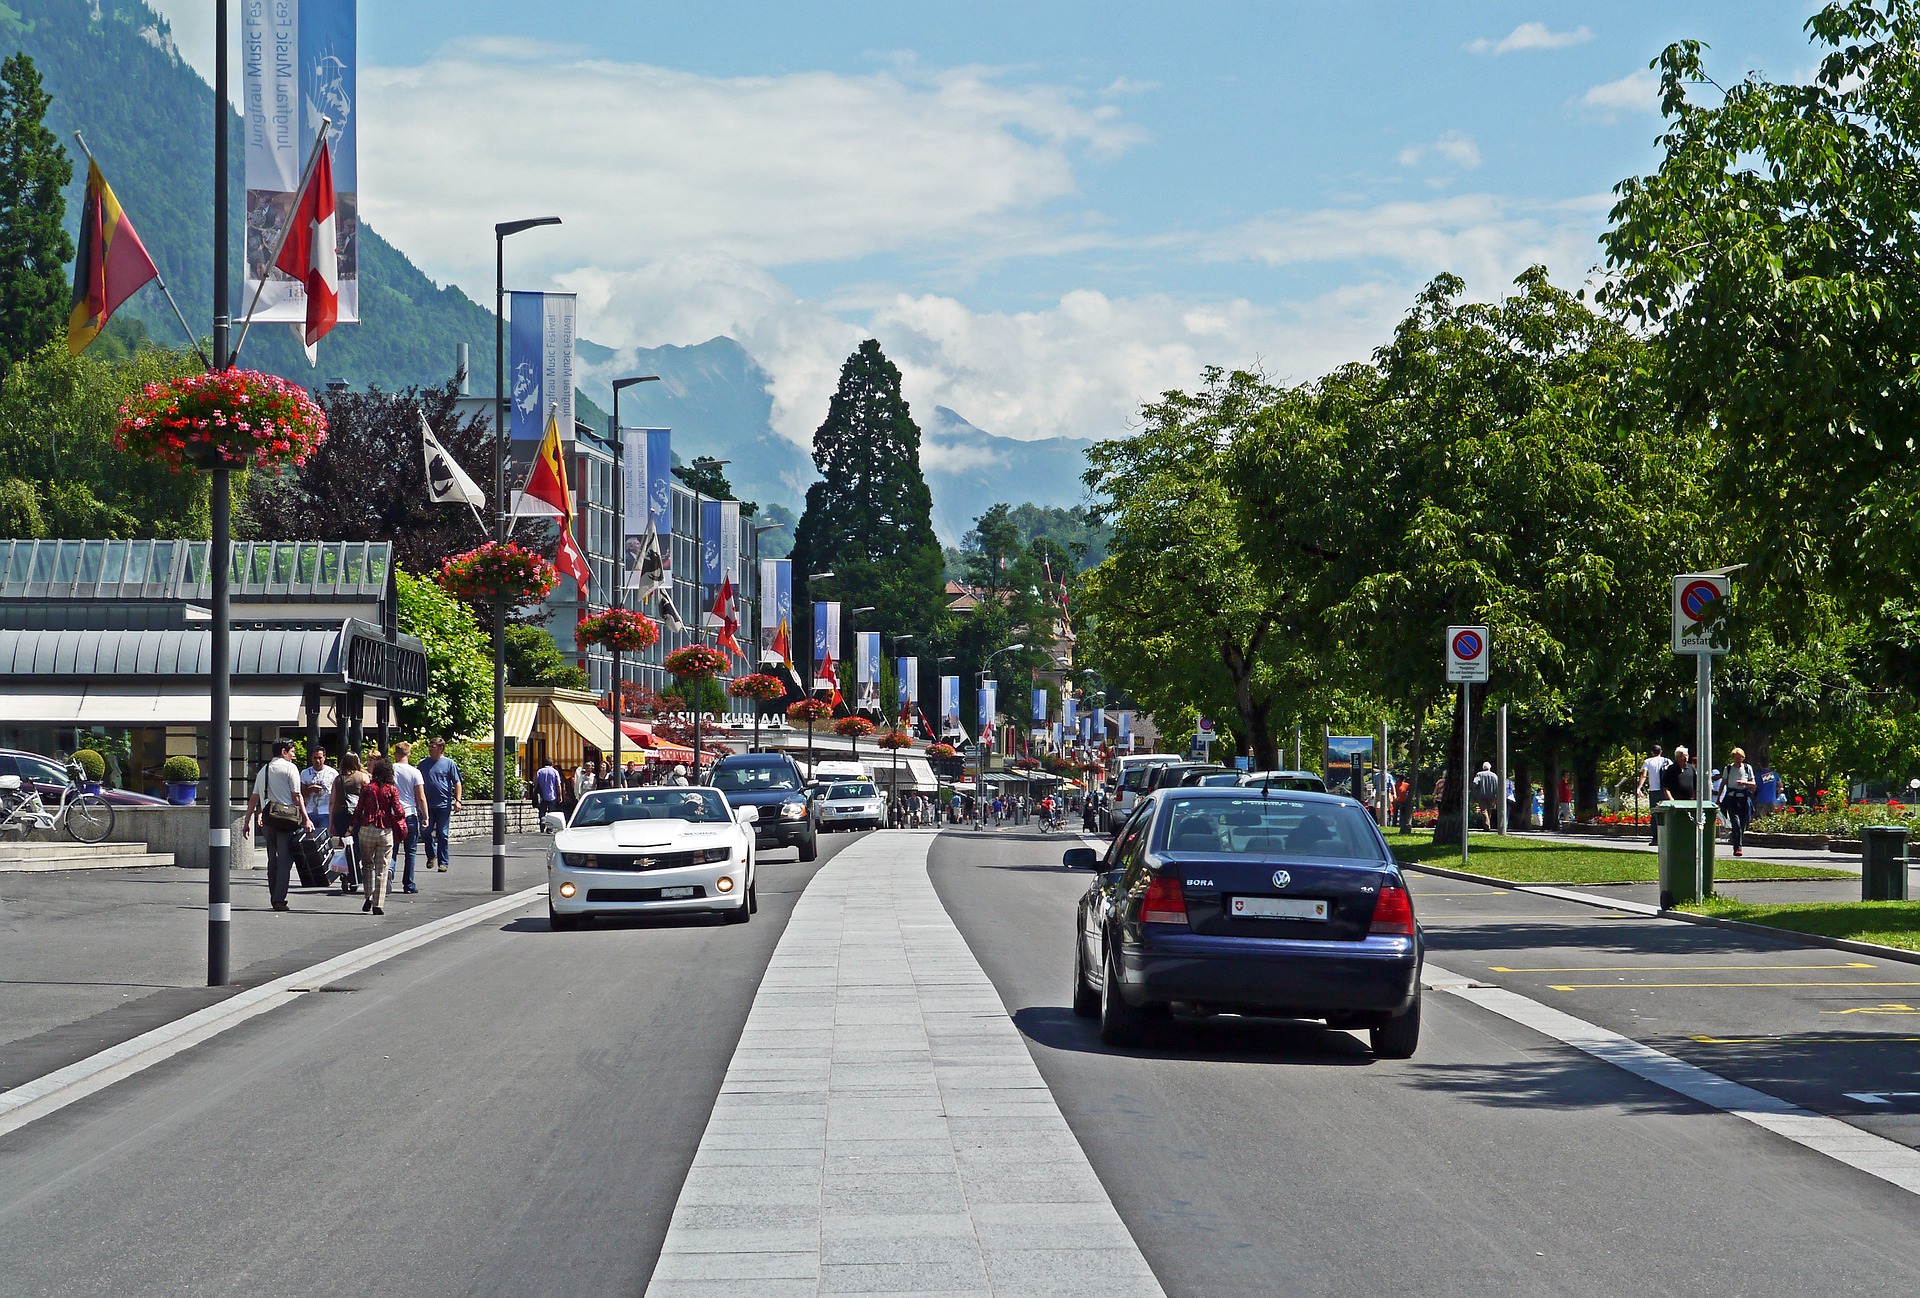 Cities Switzerland - أهم المدن والمعالم في سويسرا